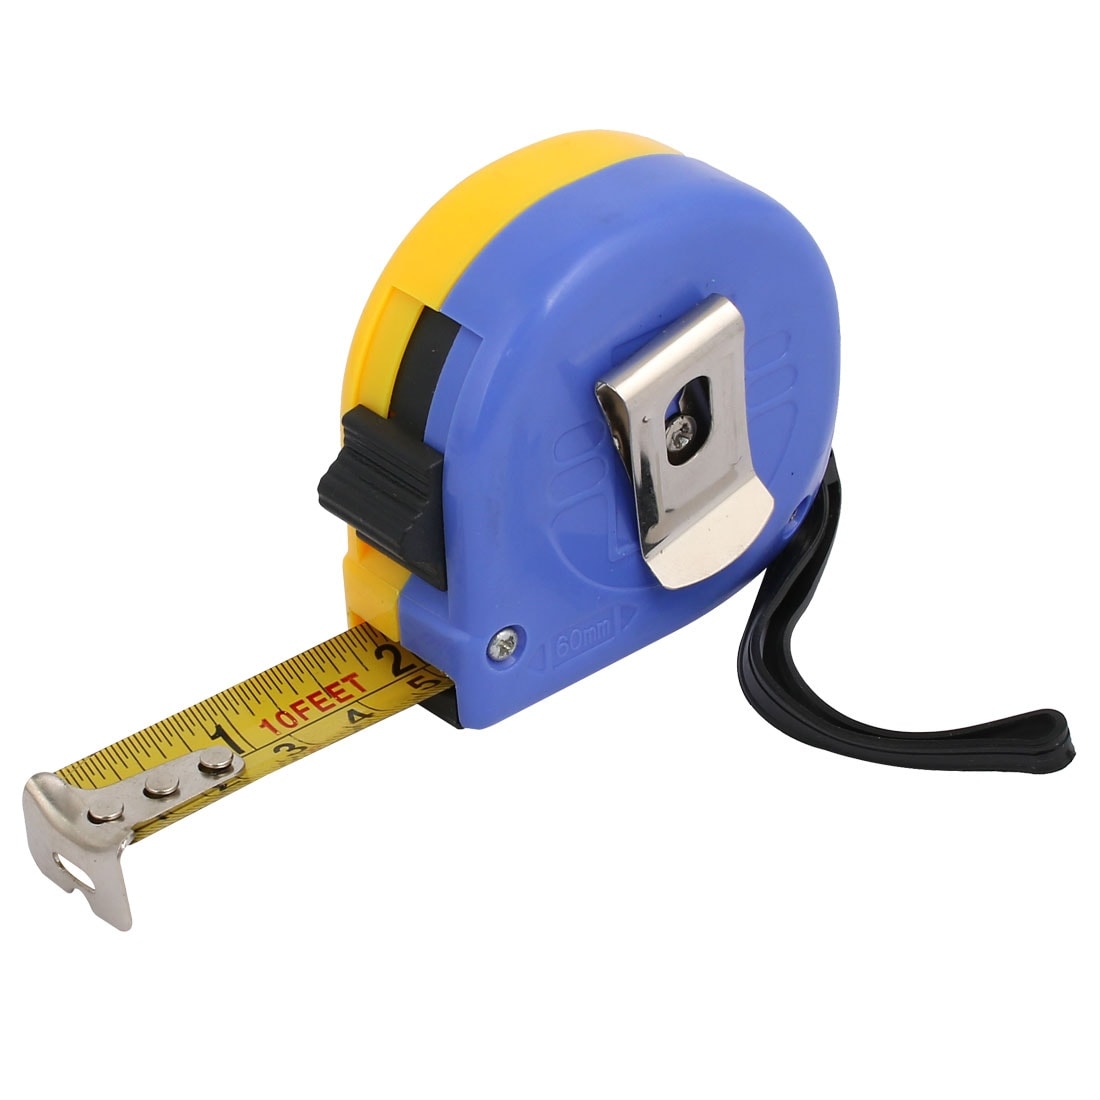 VTG ROE 10 Foot Tape Measure PC10 Yellow Plastic Case Yellow Tape